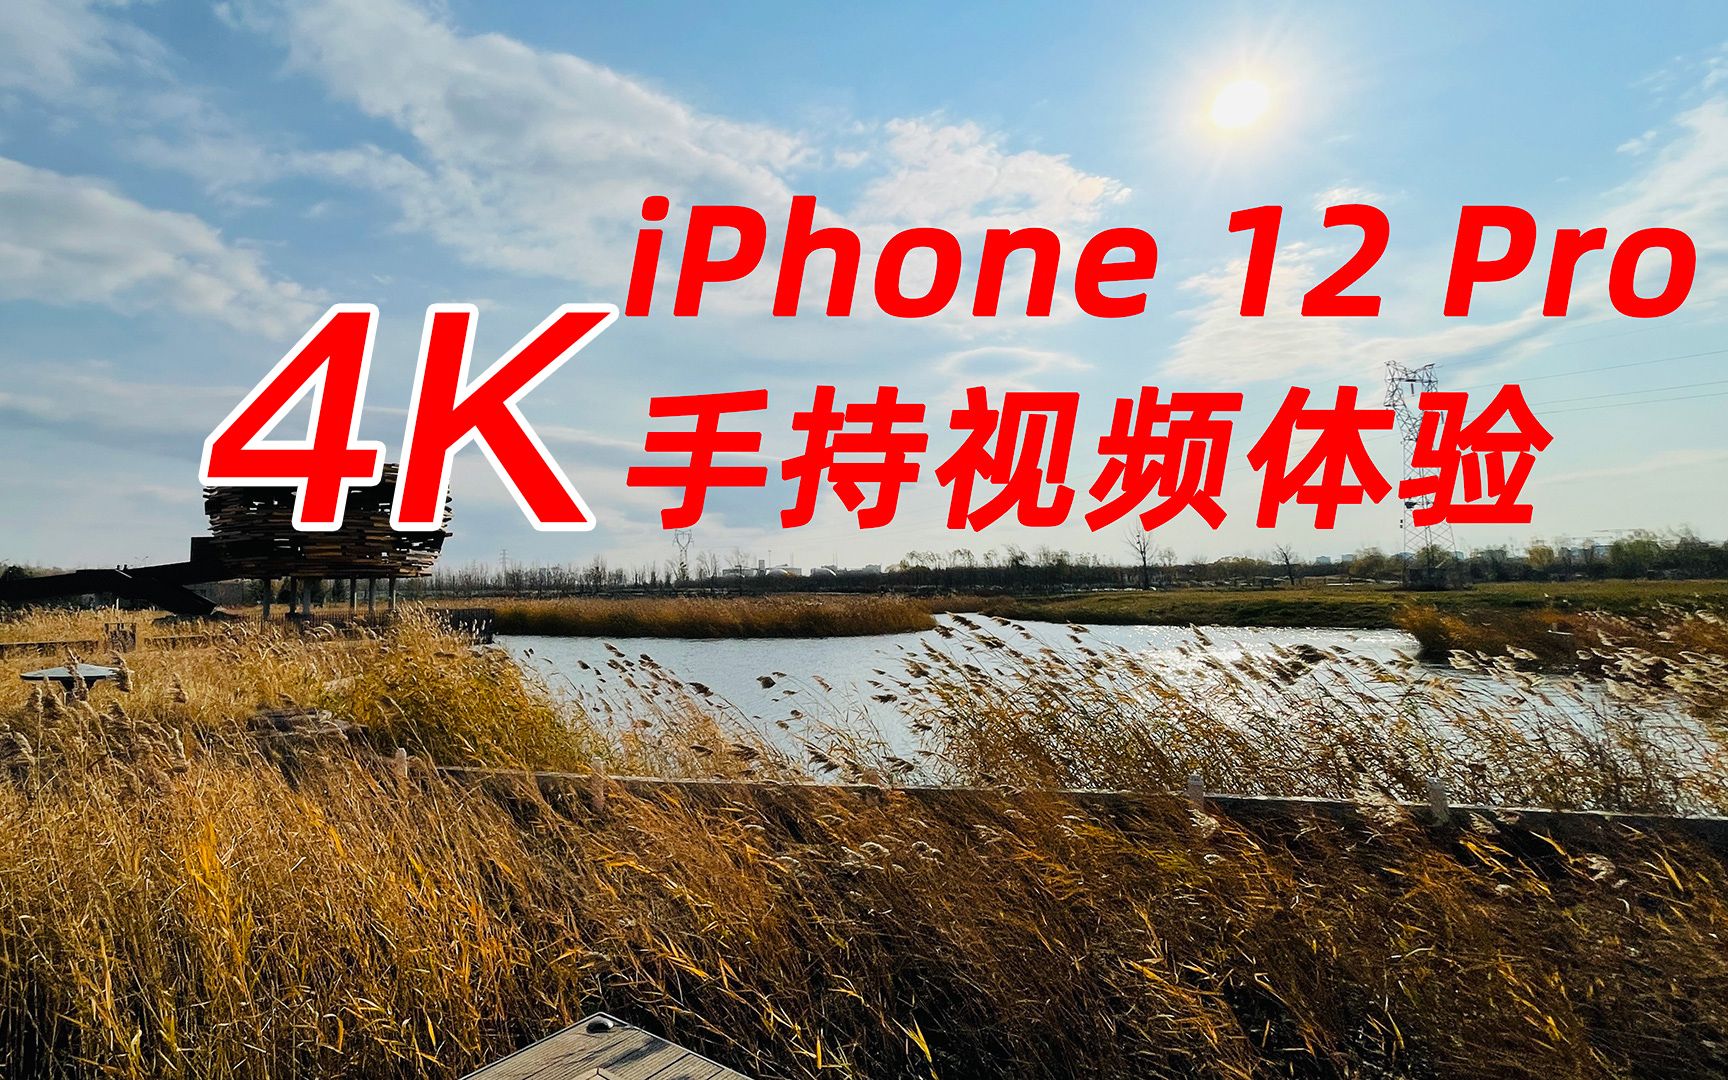 iPhone 12 Pro手持拍摄4K视频体验 ——来感受一下手机拍摄的4K吧